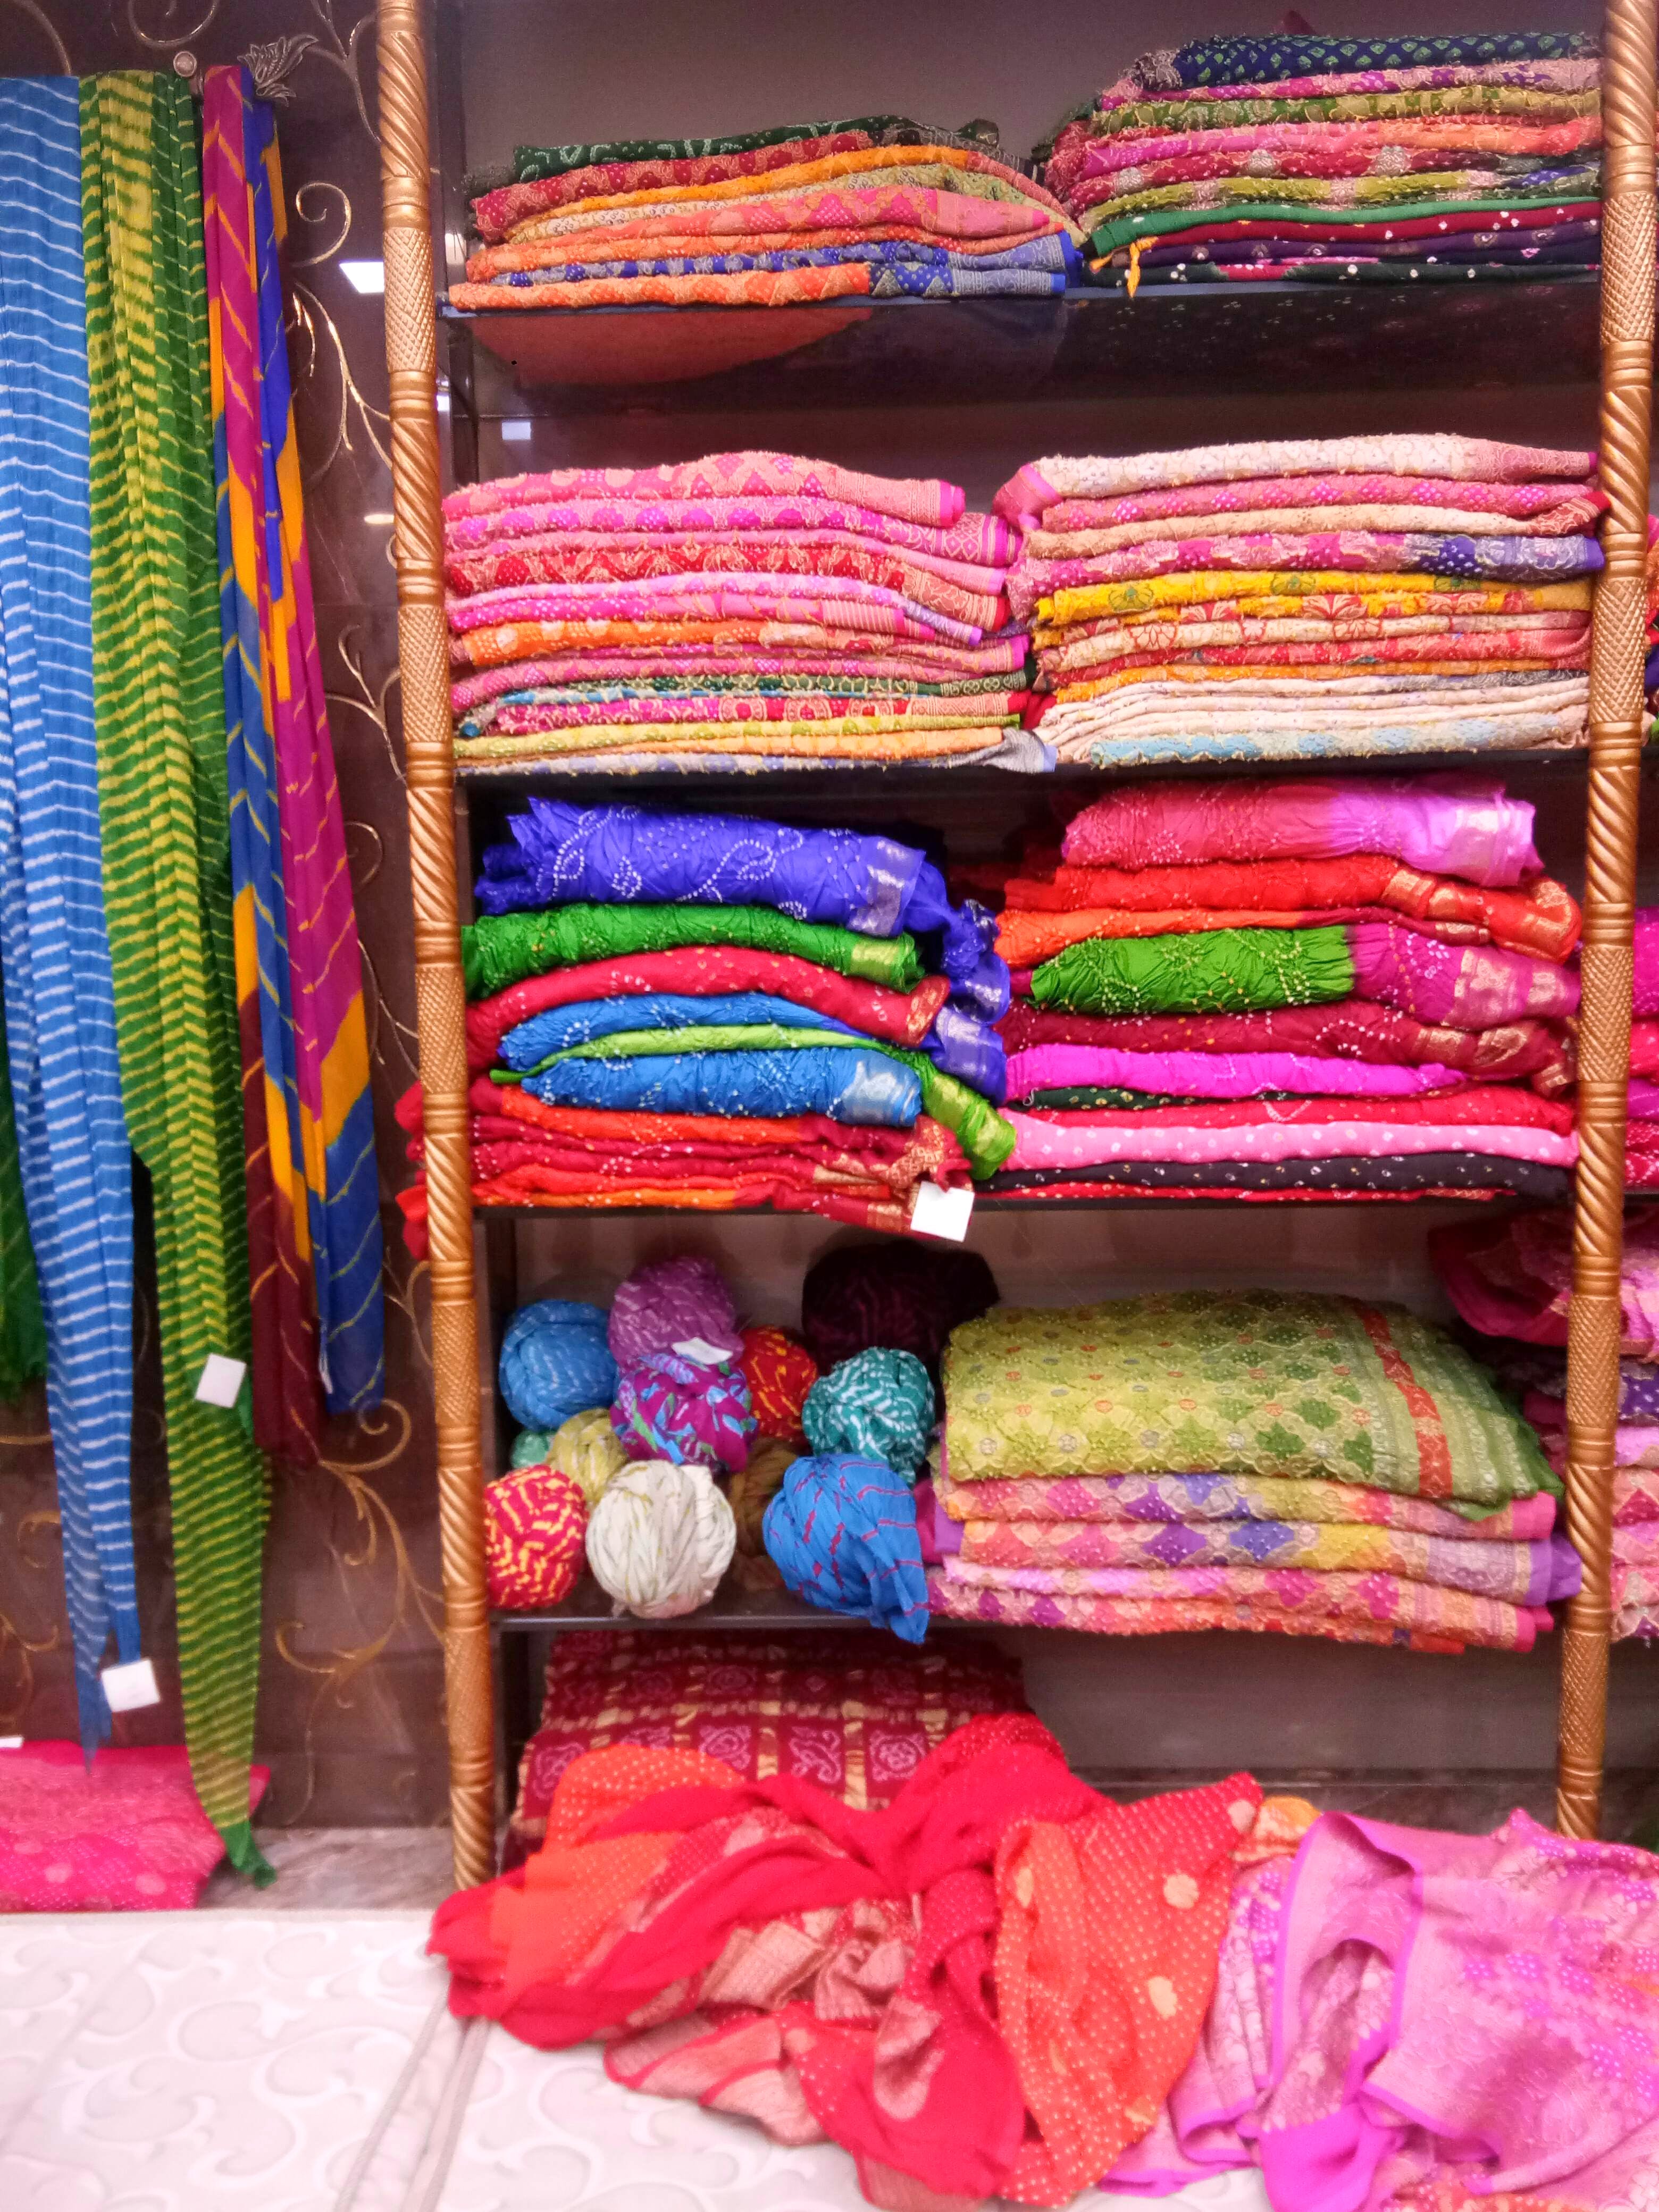 Wool,Textile,Thread,Woolen,Pink,Woven fabric,Room,Knitting,Linens,Magenta